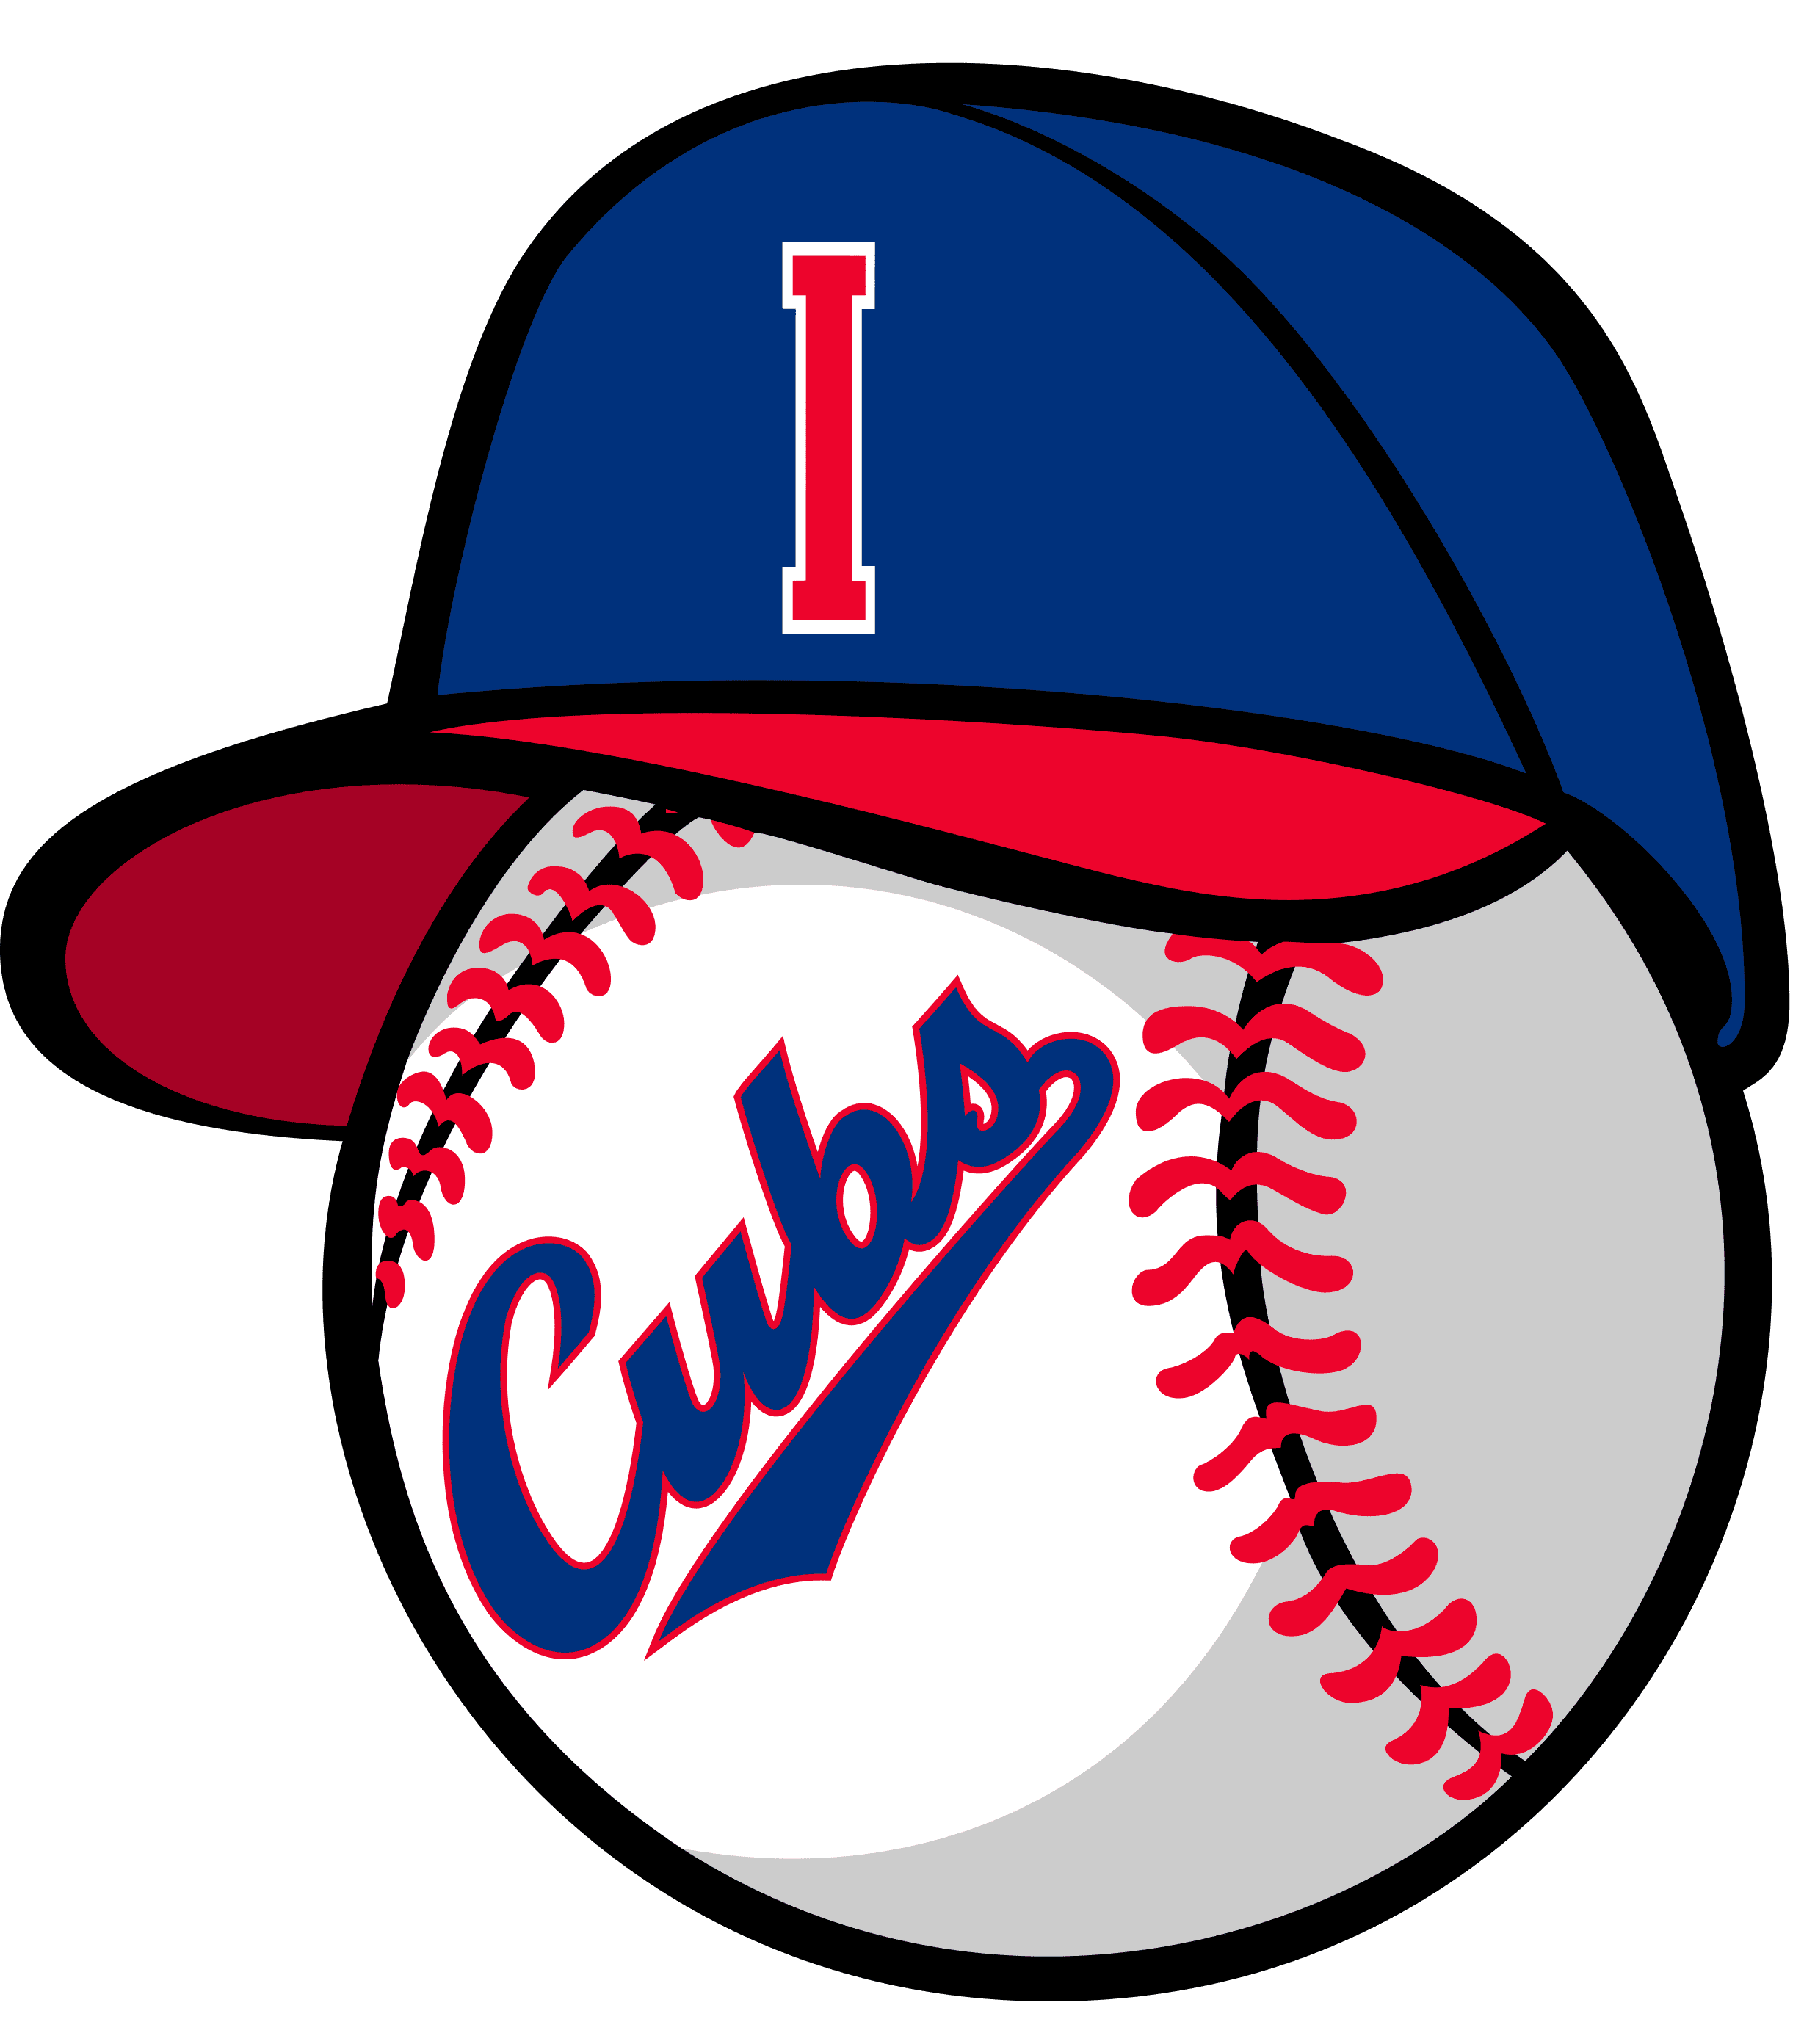 Chicago Cubs Mlb Svg Cut Files Baseball Clipart Bundle